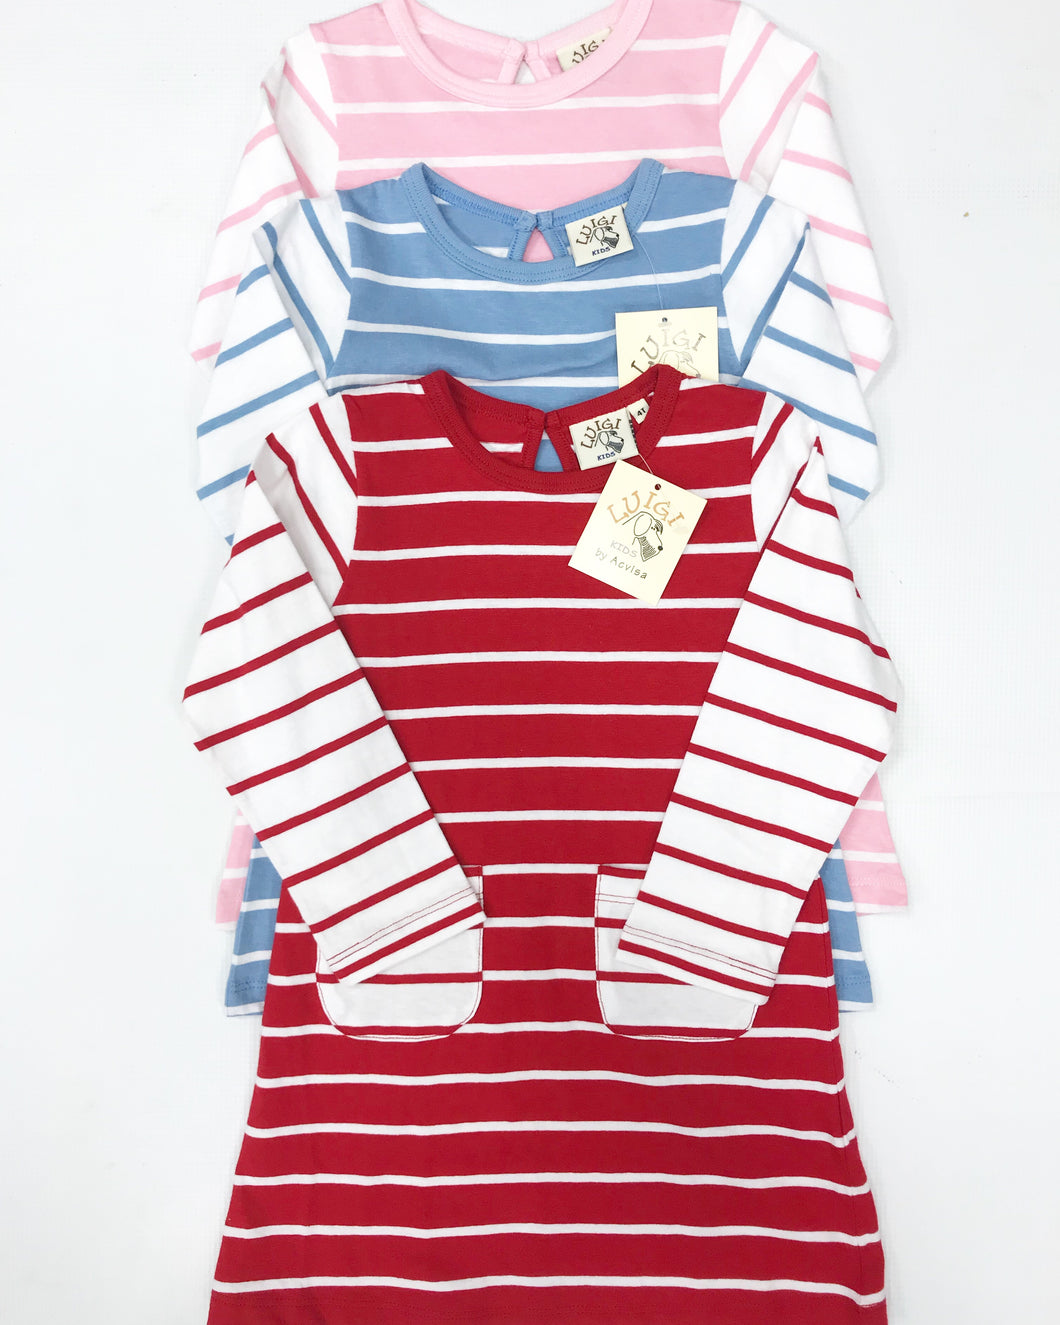 L/S Red Stripe Dress w/ Pockets